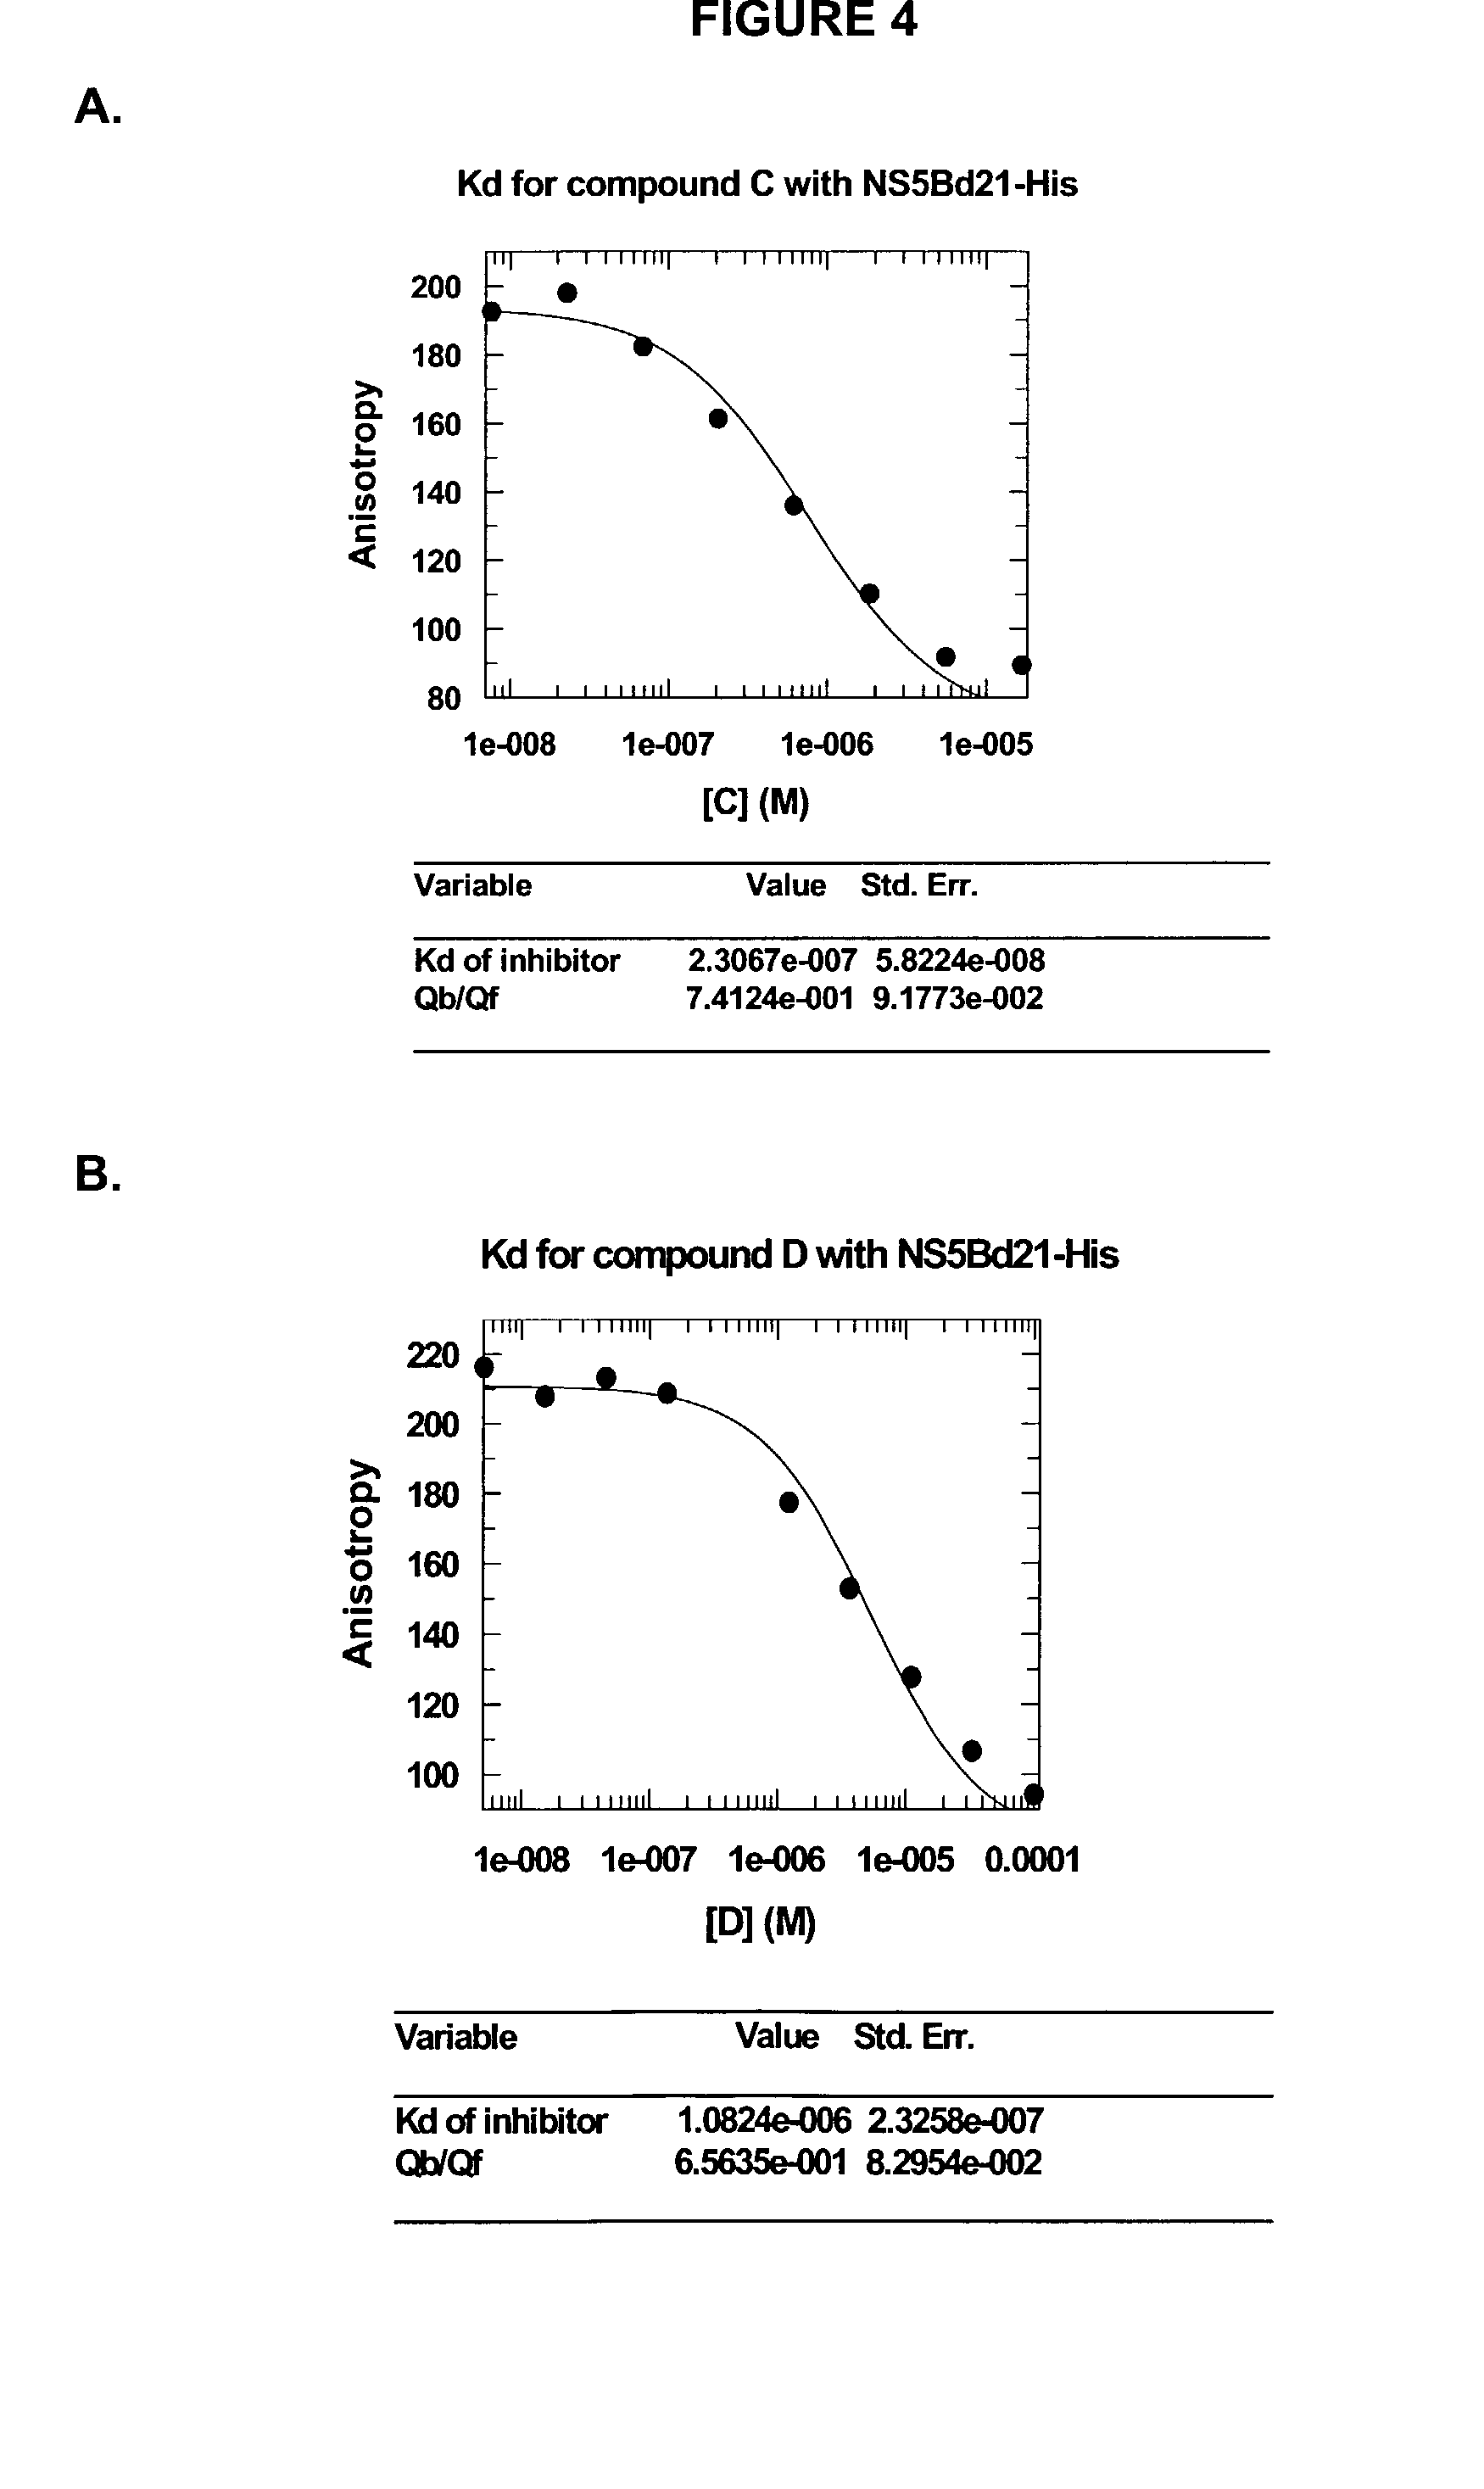 Direct binding assay for identifying inhibitors of HCV polymerase